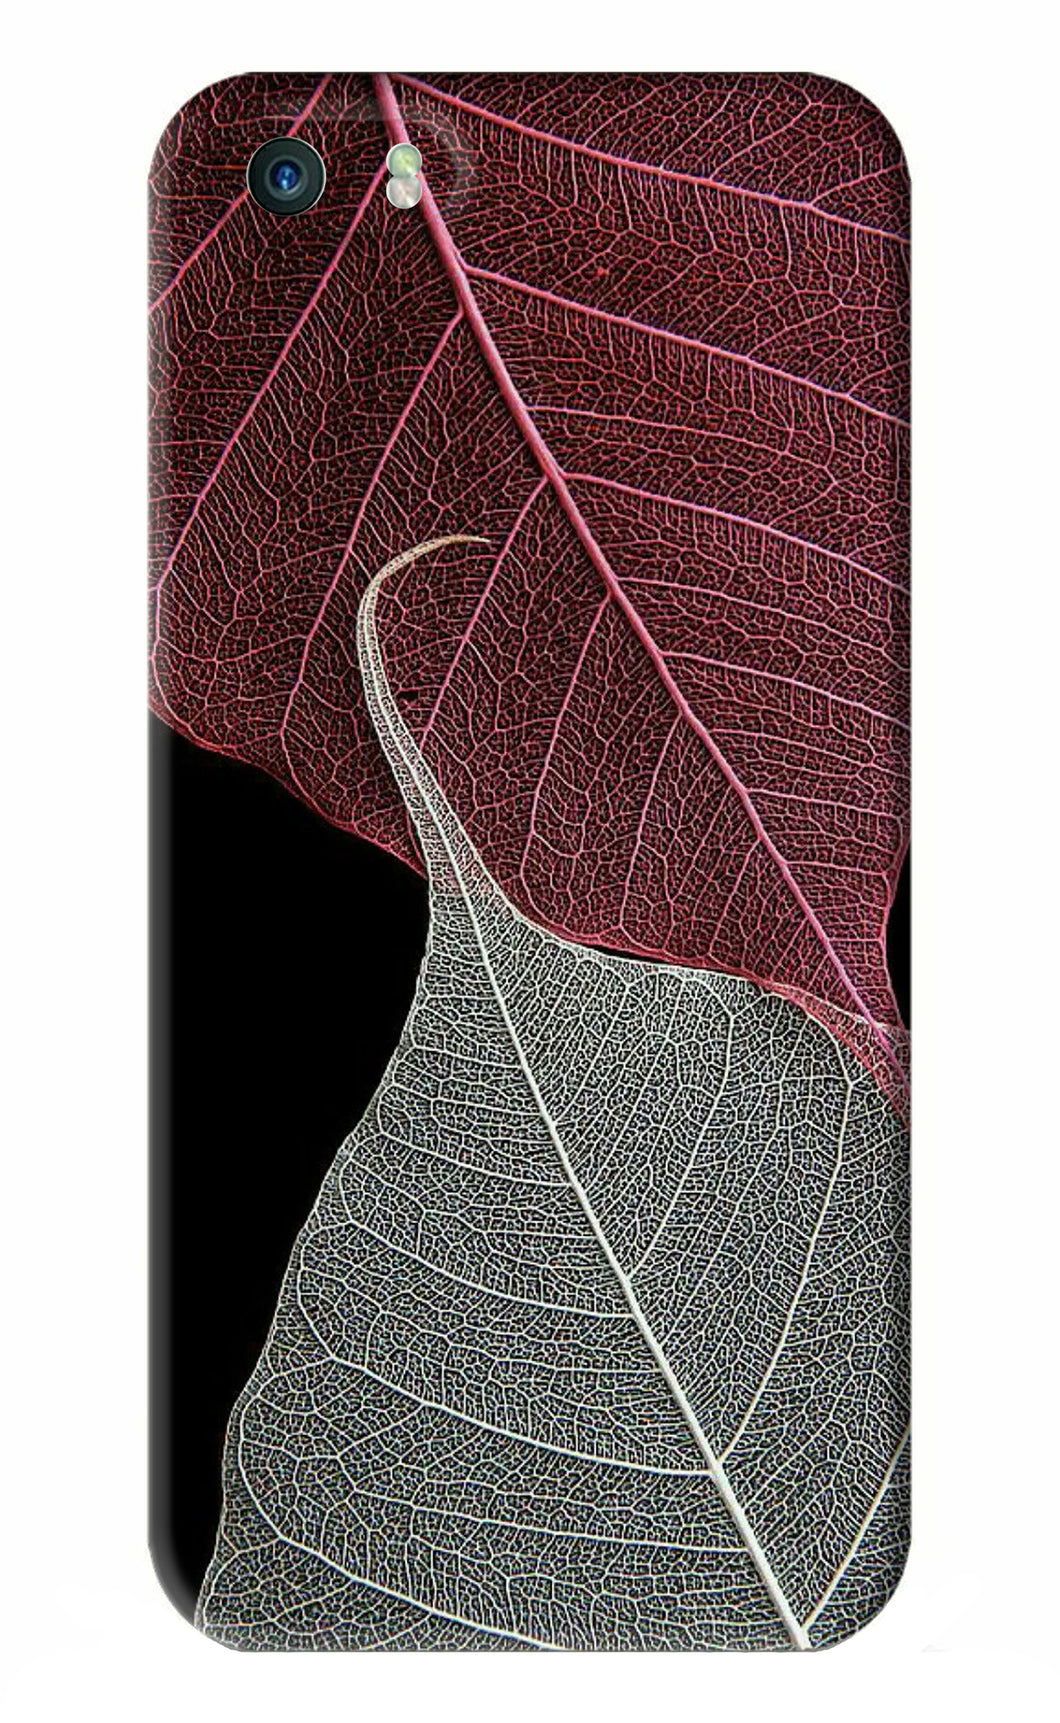 Leaf Pattern iPhone 5 Back Skin Wrap